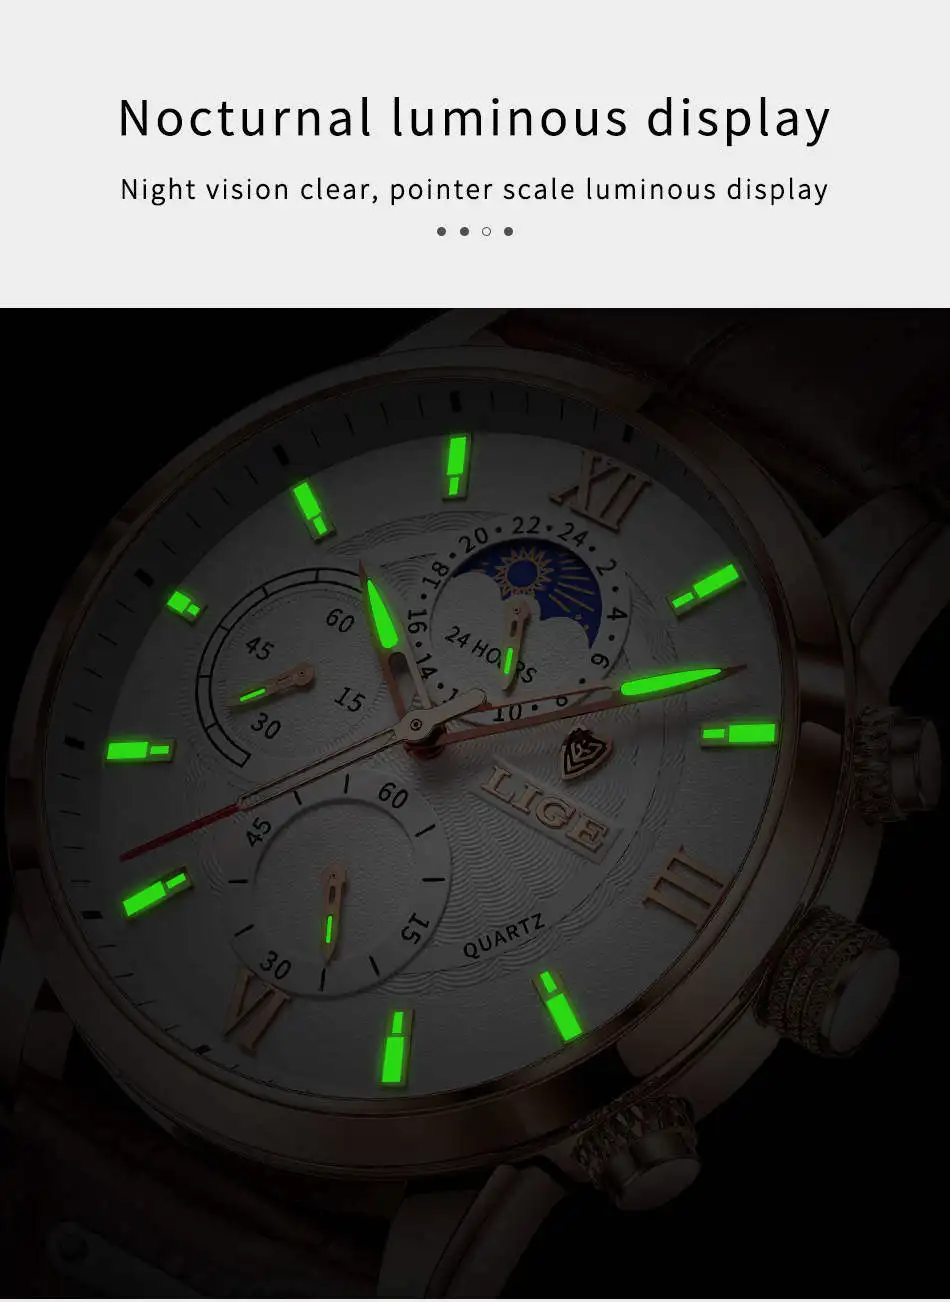 Lige 8932 New Casual Quartz Watches for Man Leather Waterproof Fashion Reloj Watch Lige